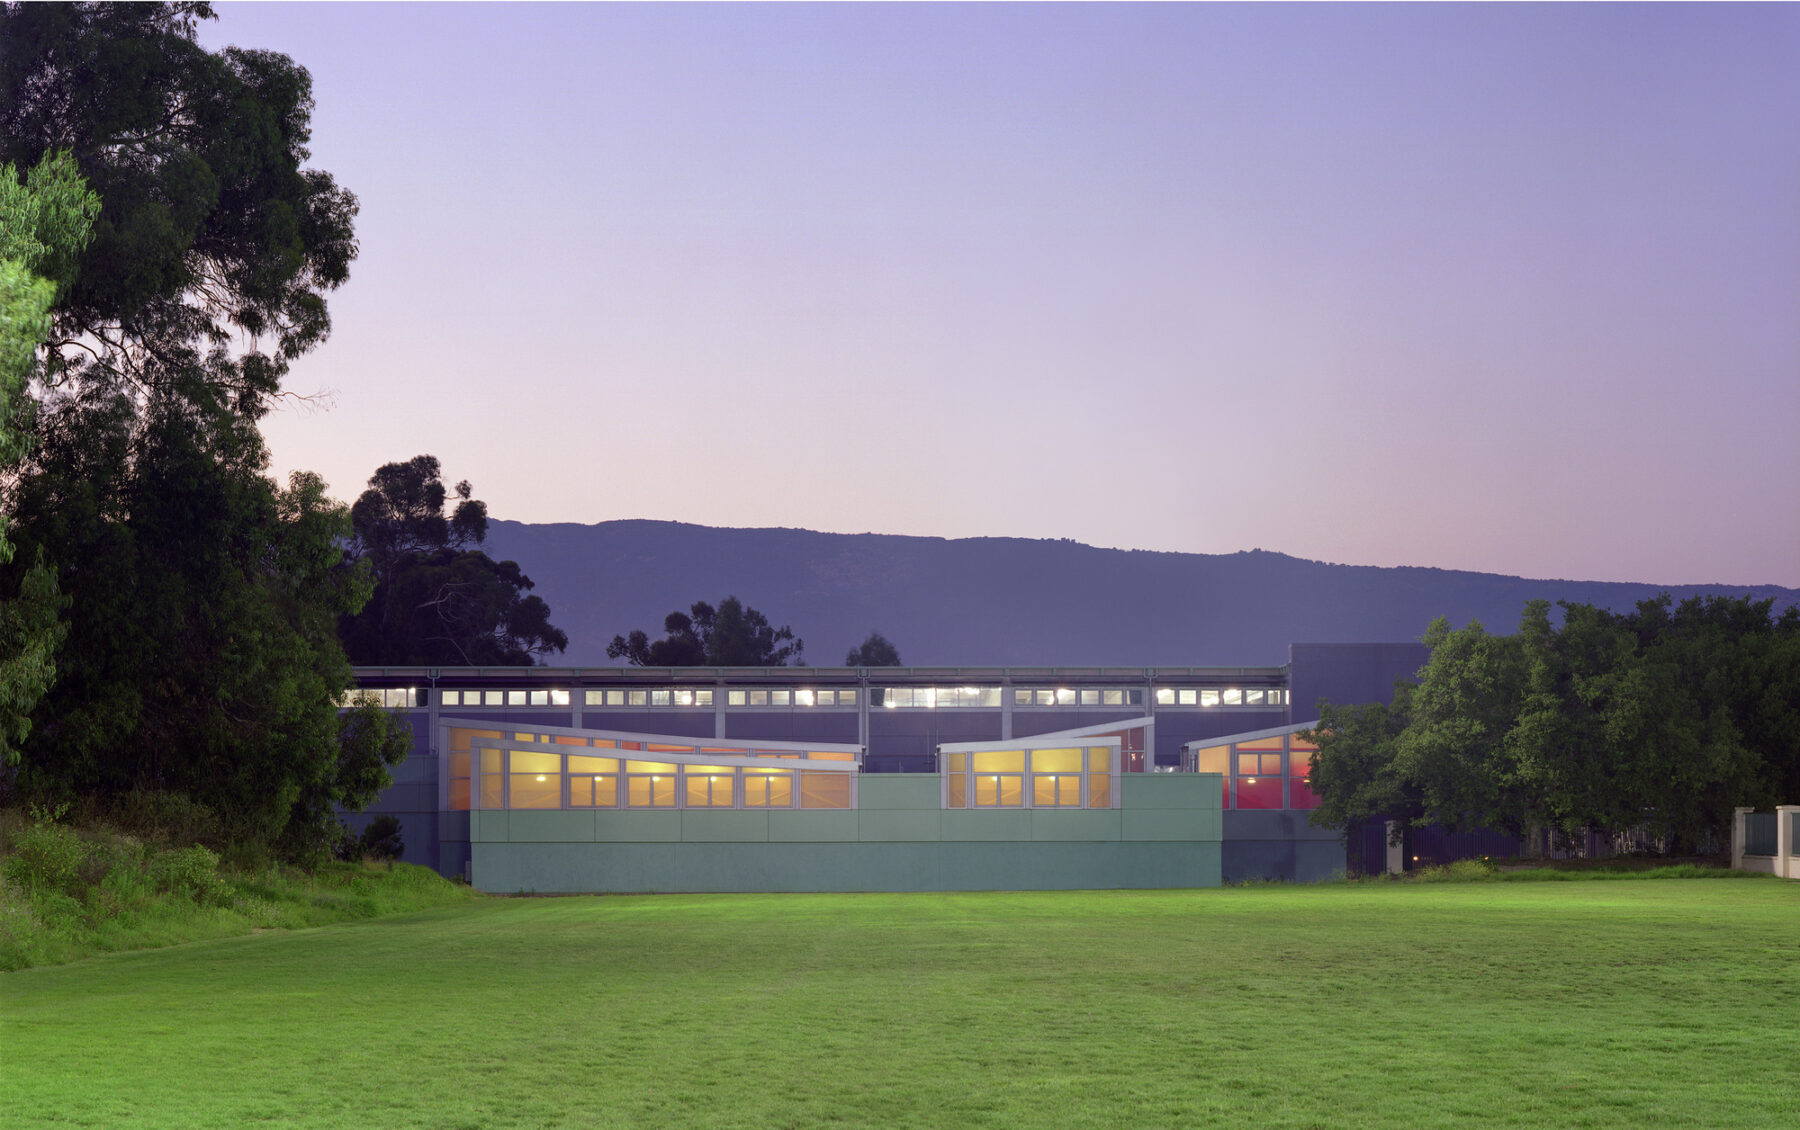 color photo of UCSB rec center, exterior, against a mountainous horizon